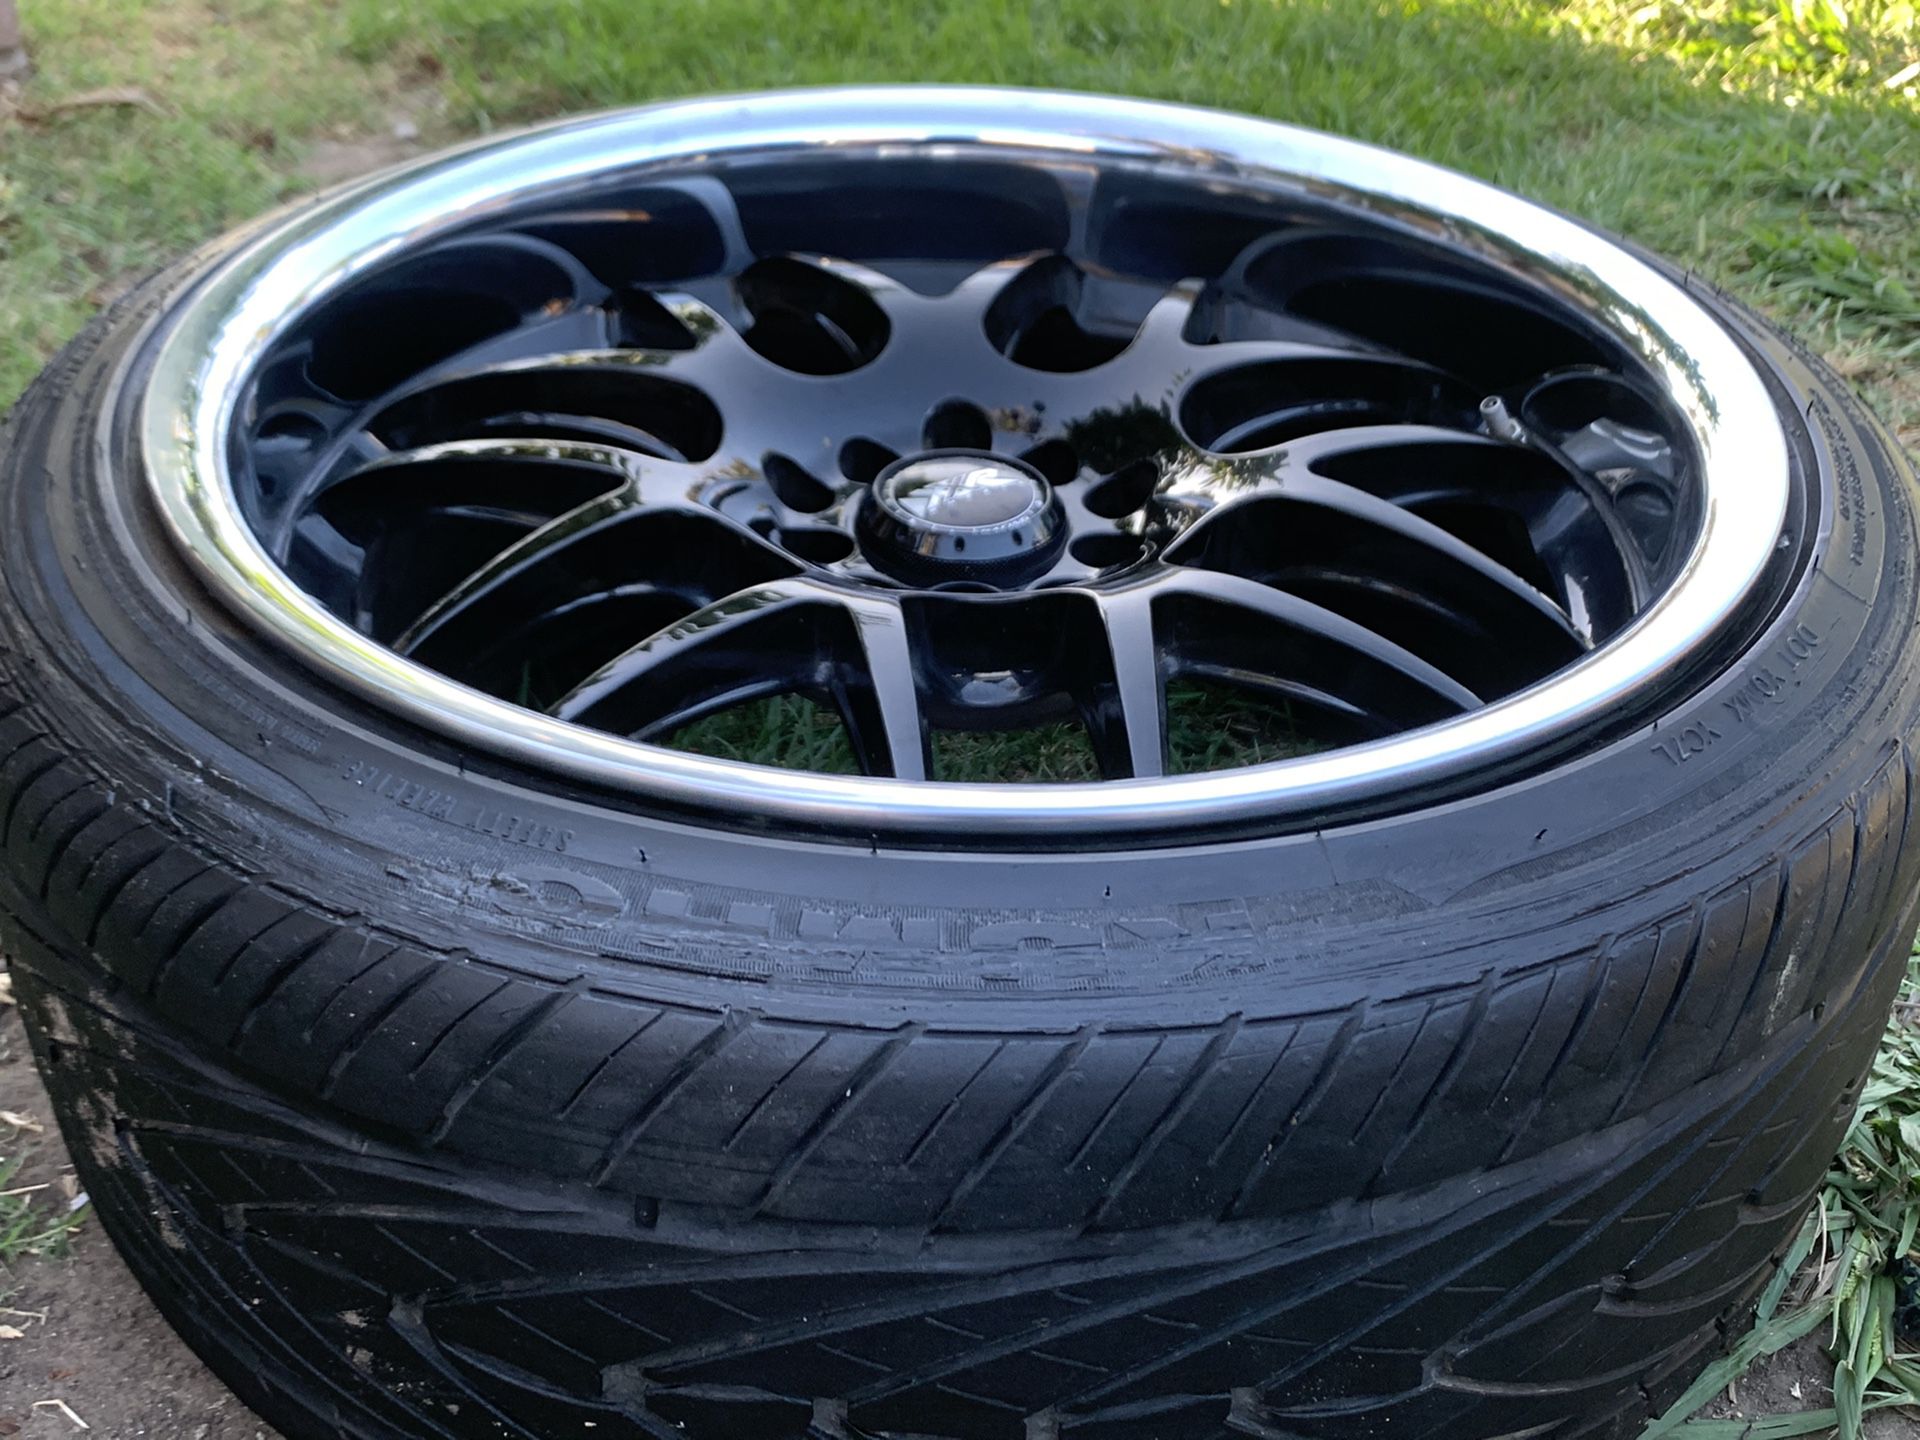 18”x9 all around XXR universal lug pattern set of rims and tires